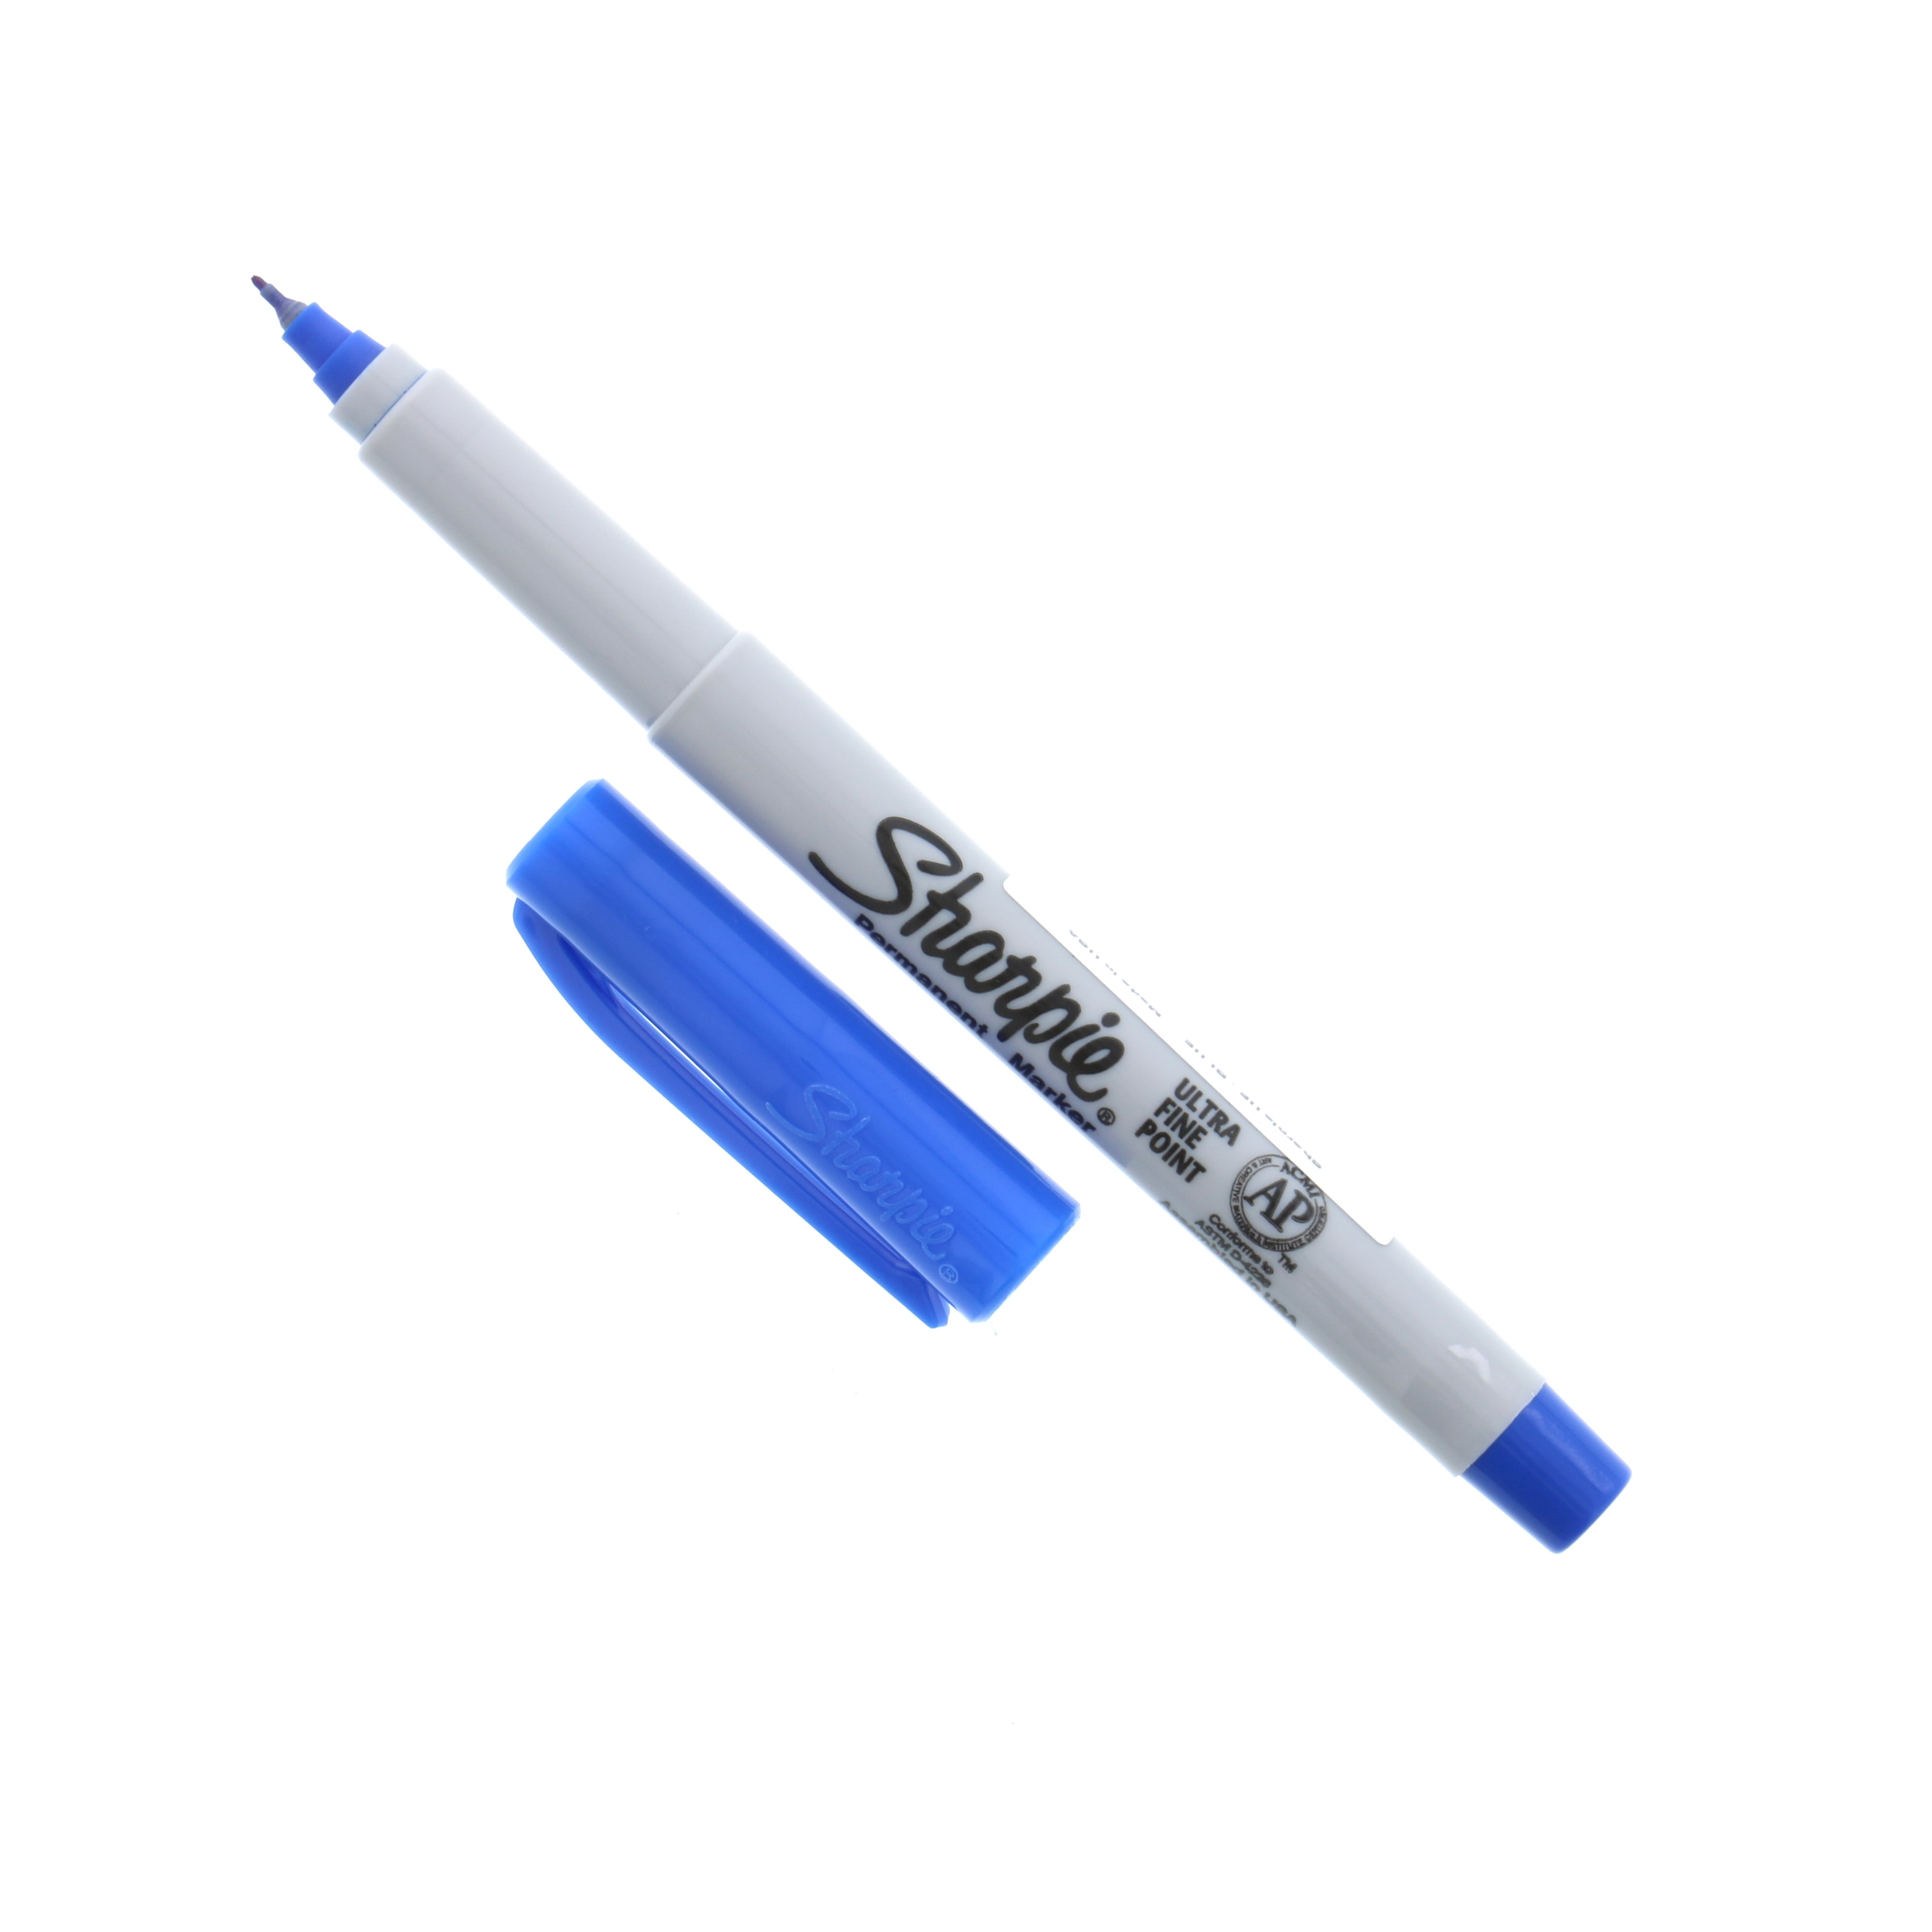 Sharpie 37003 Blue Ultra-Fine Point Permanent Marker - 12/Pack